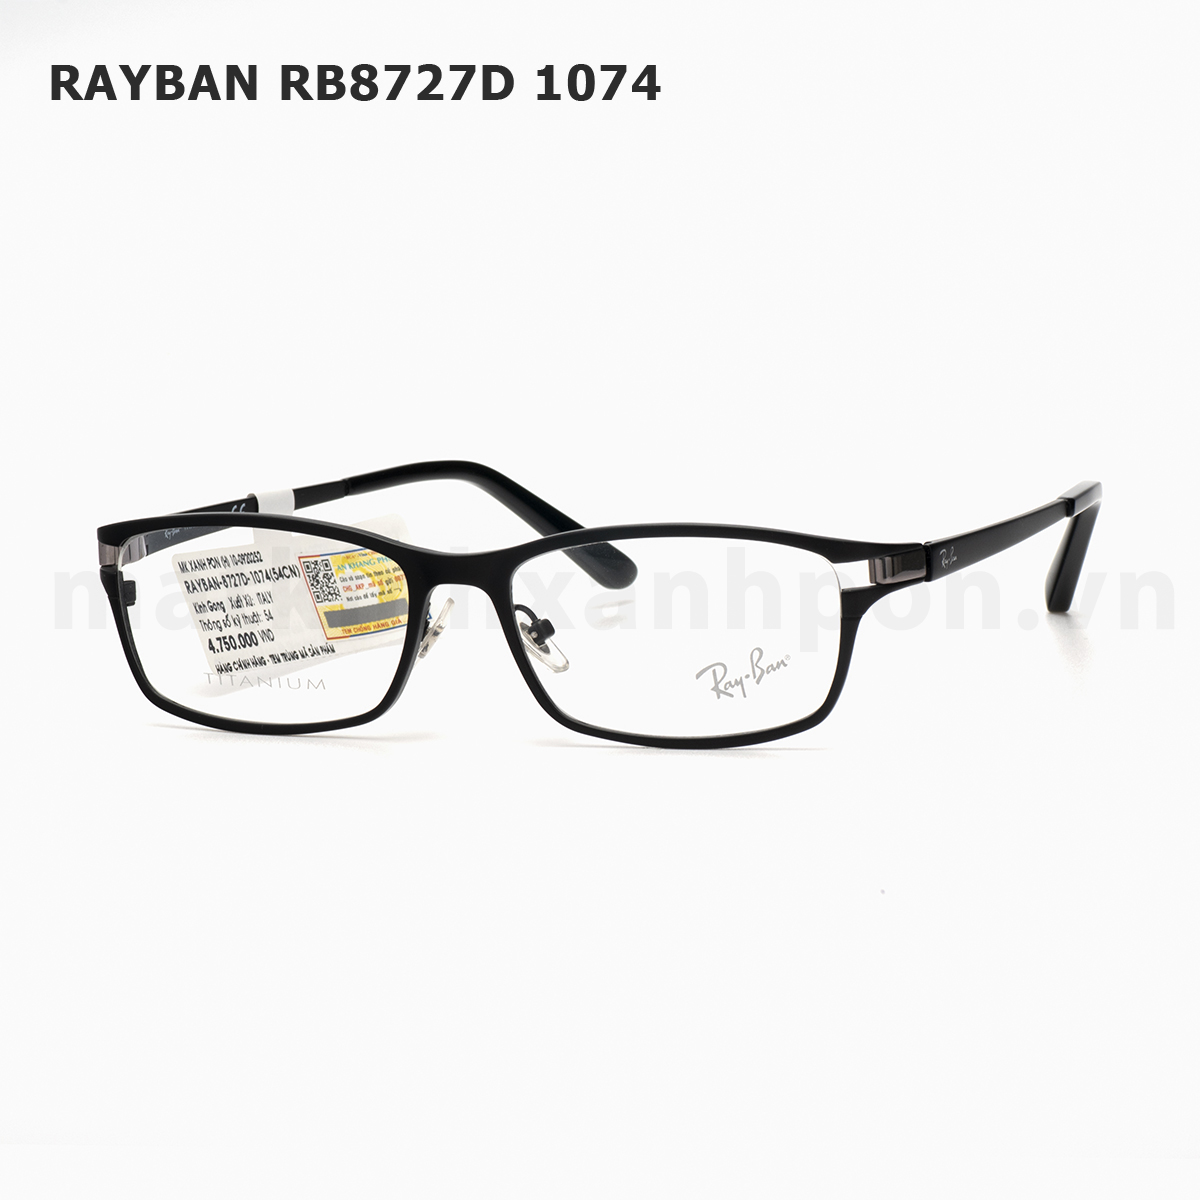 Rayban RB8727D 1074